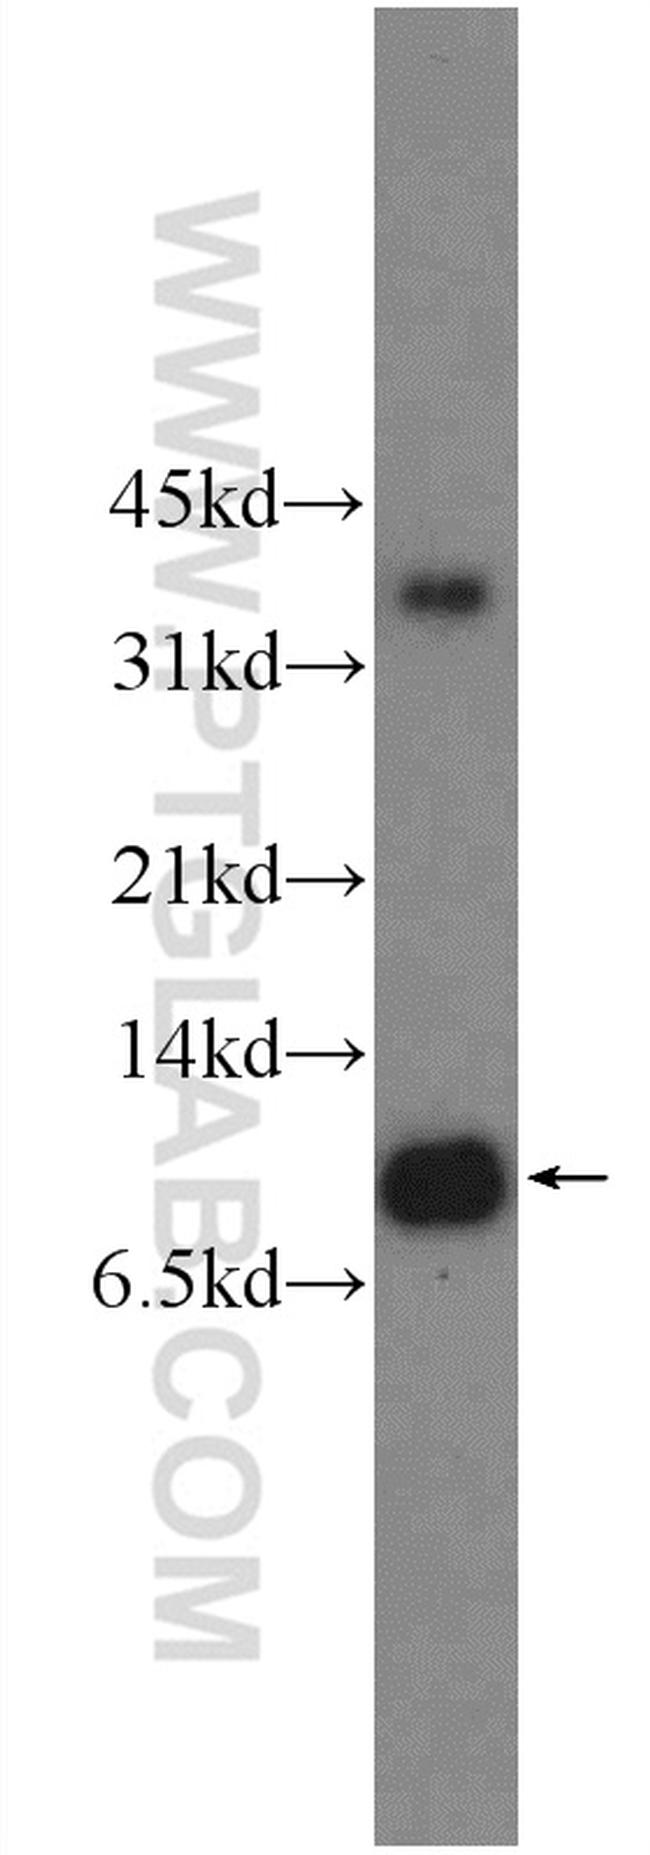 LSM8 Antibody in Western Blot (WB)